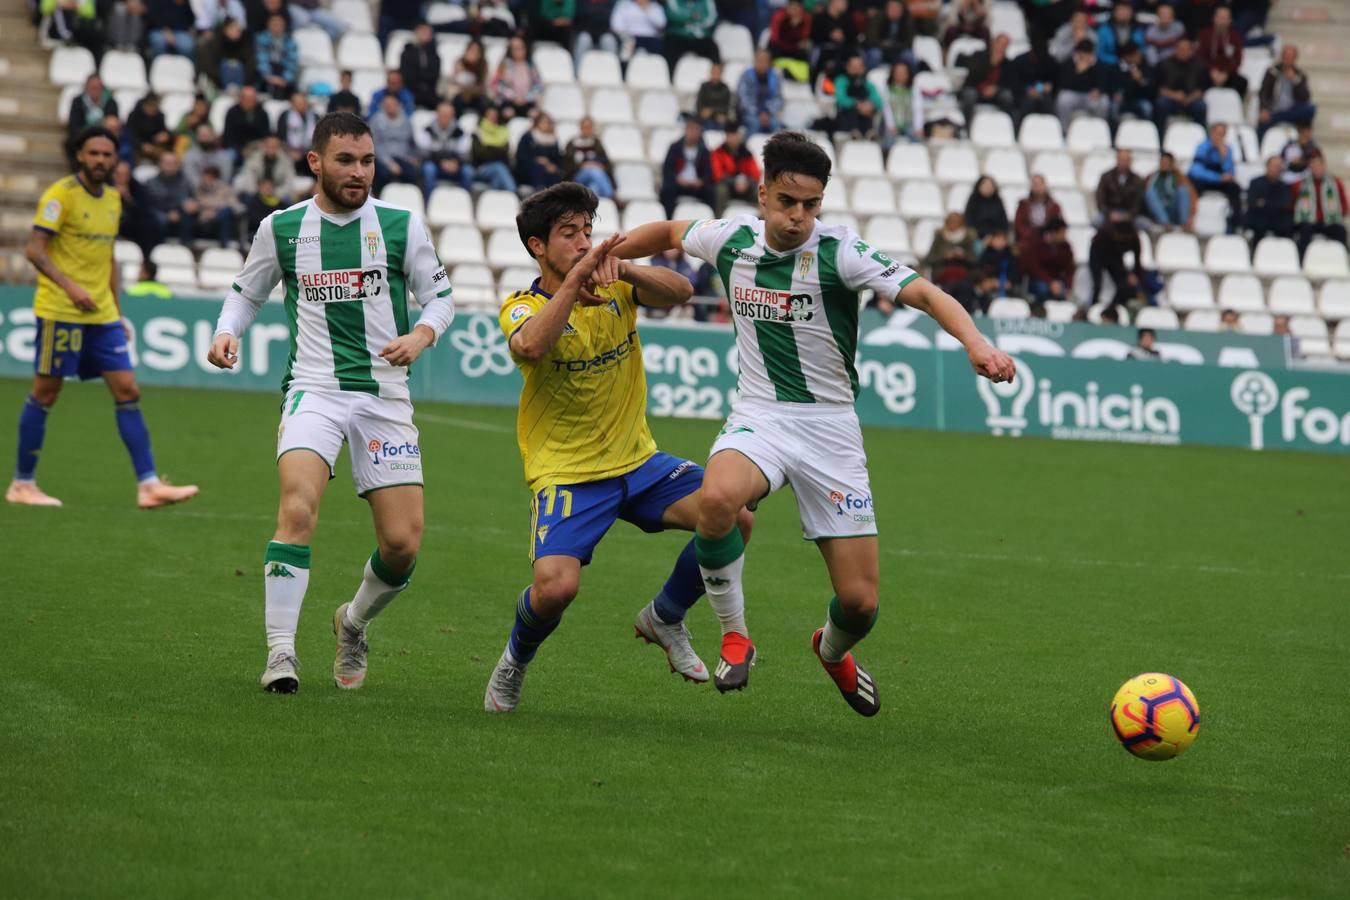 FOTOS: El Córdoba-Cádiz CF en imágenes